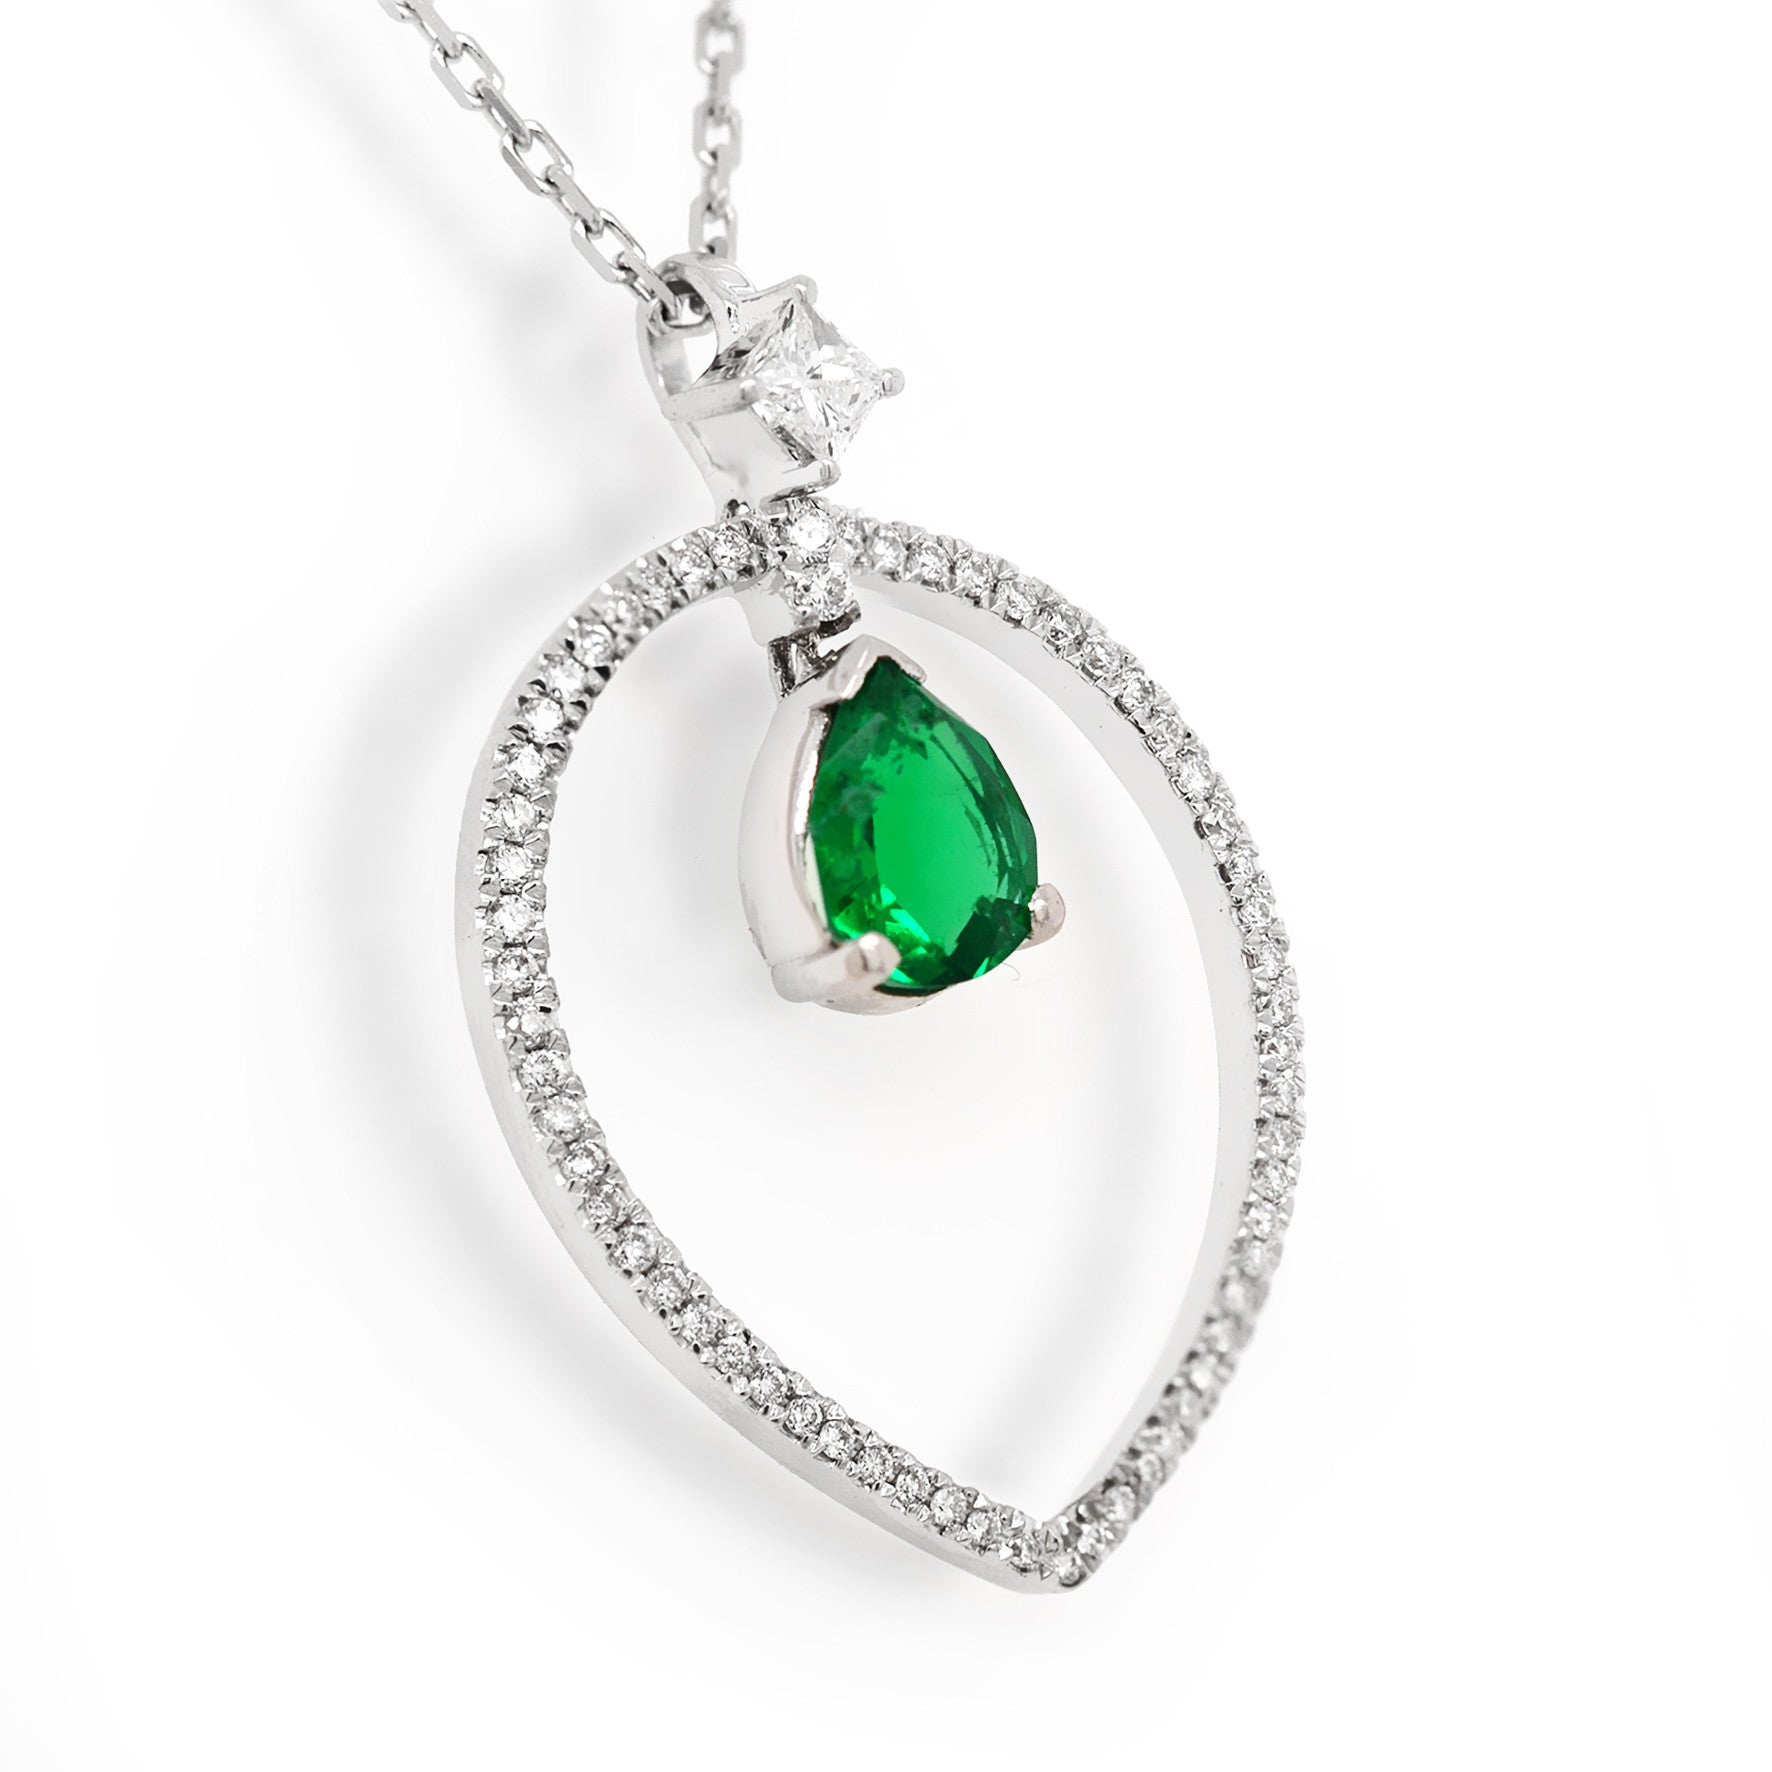 Pear Cut Emerald Pendant with a Halo of Diamonds - ForeverJewels Design Studio 8